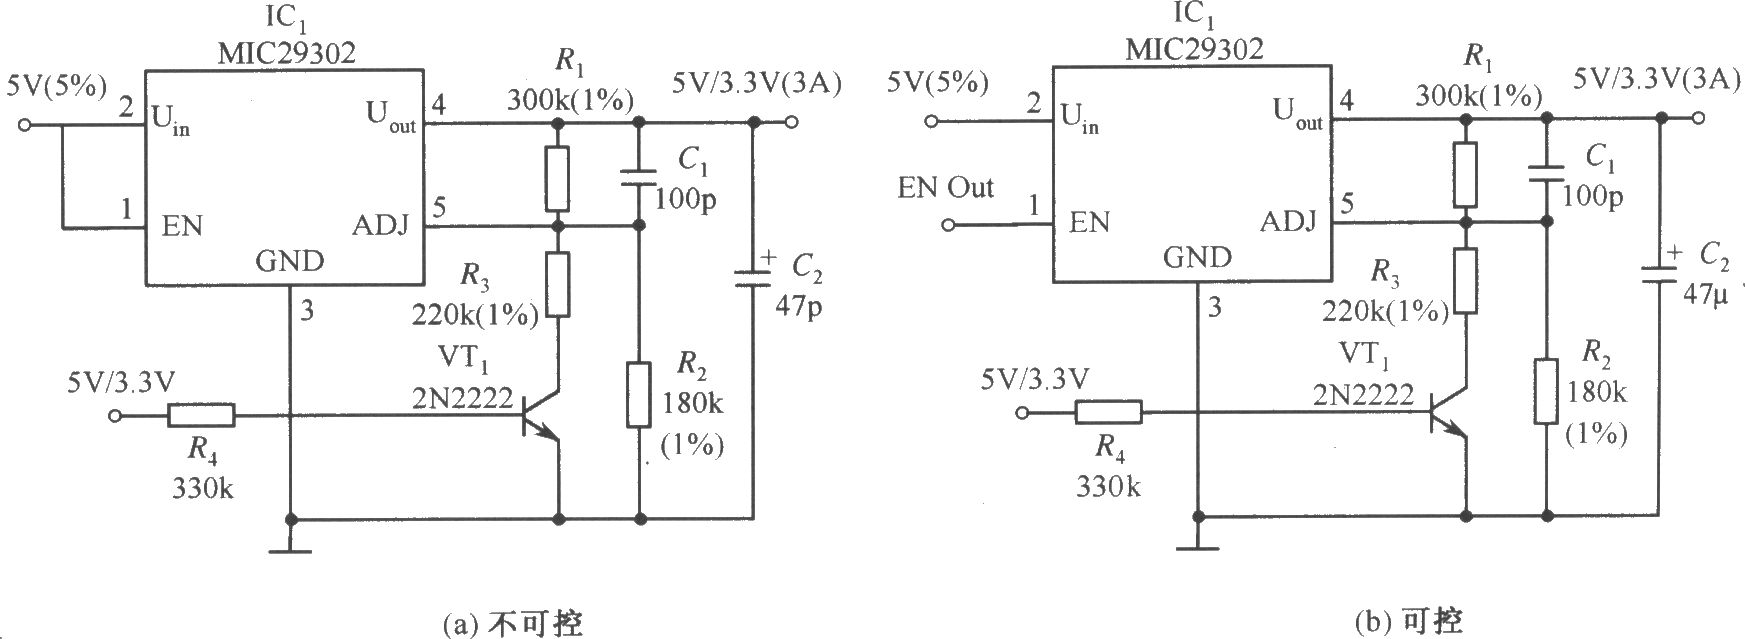 MIC29302构成的输出电压为3.3V／5V可选择的稳压器电